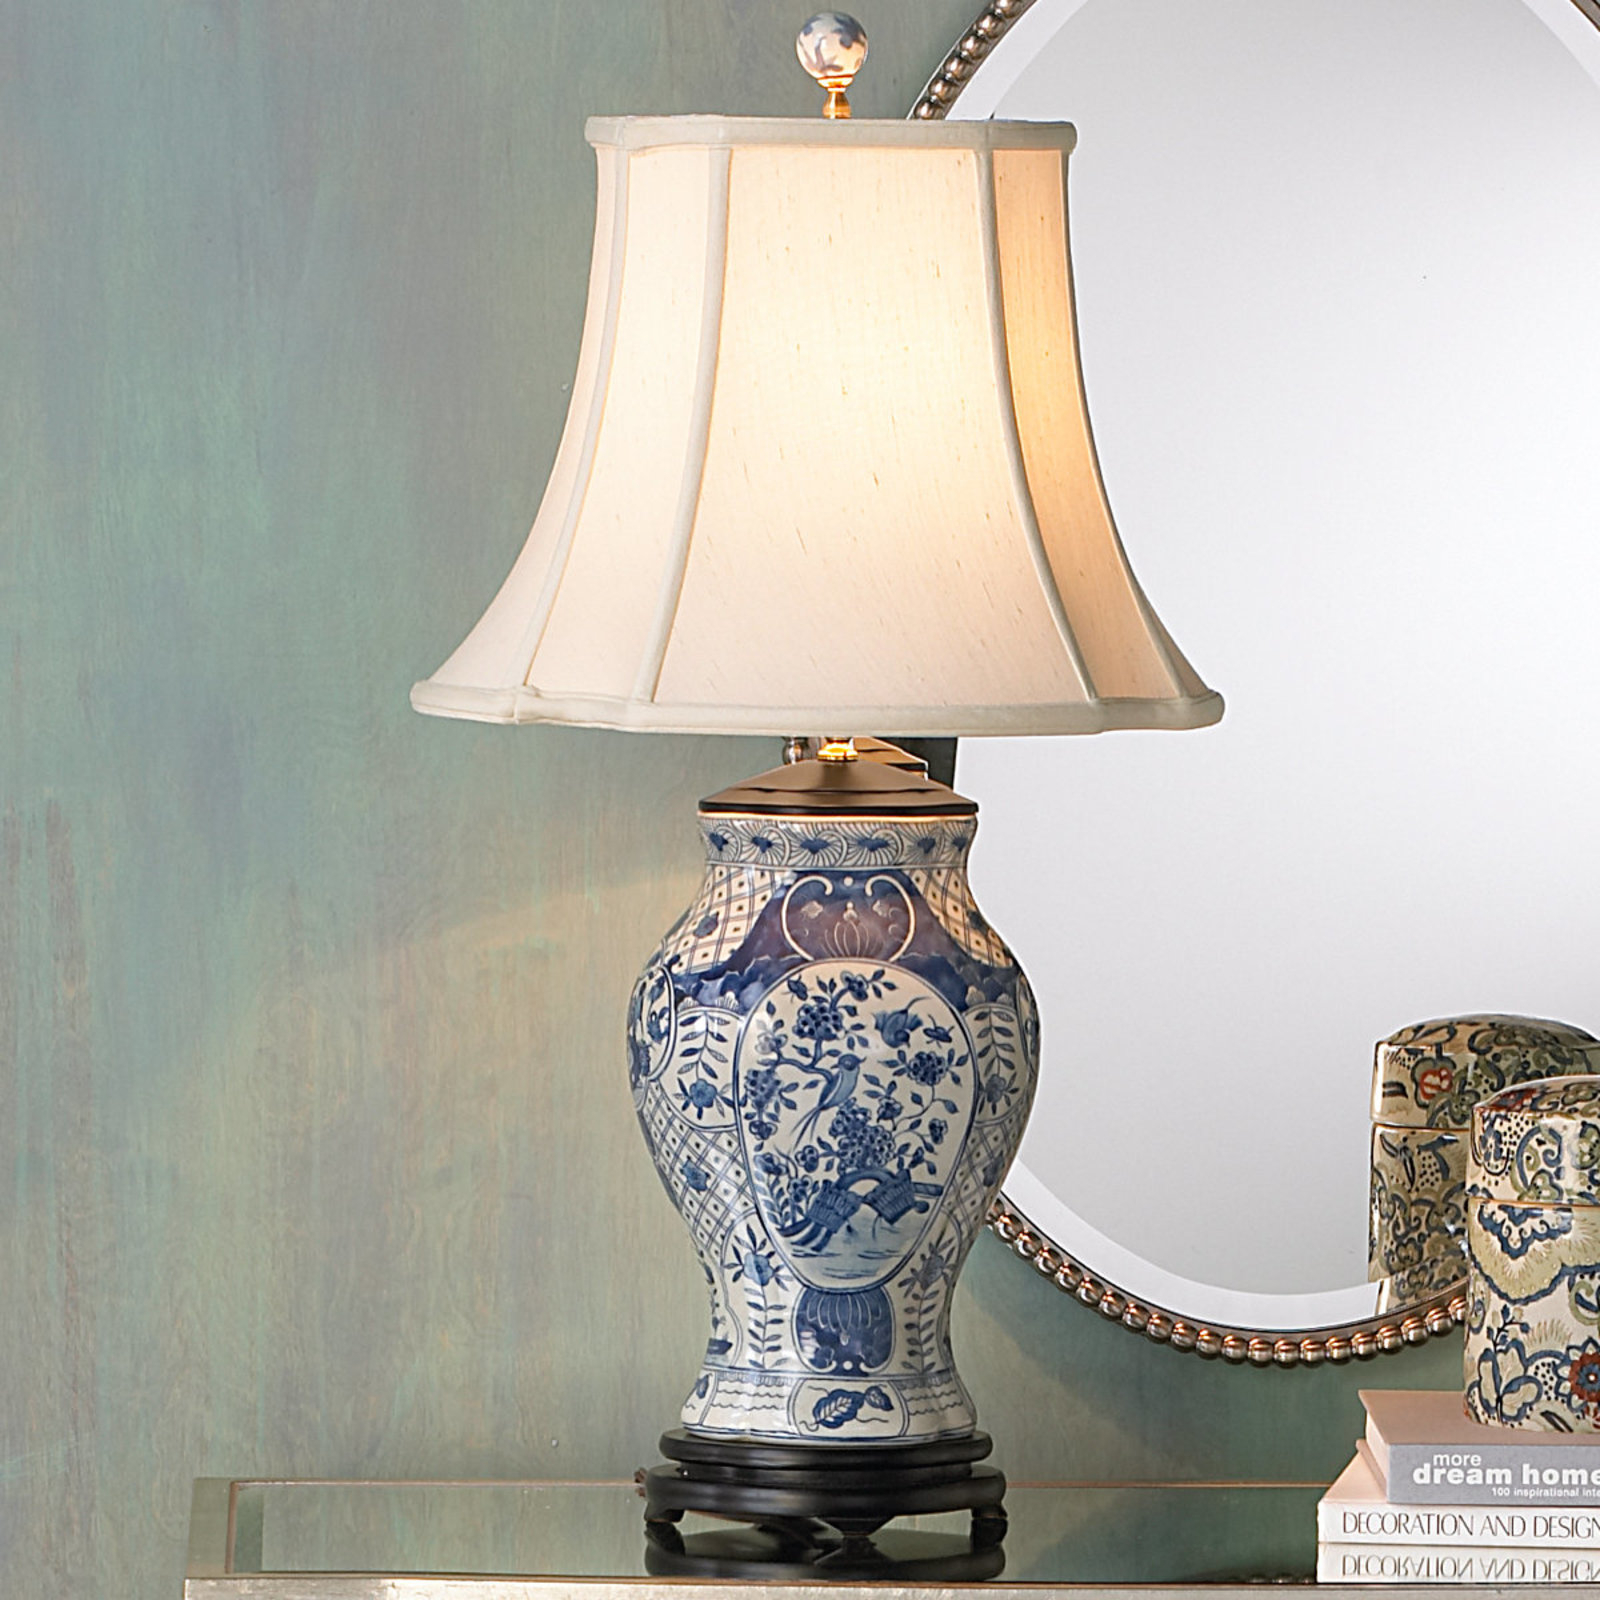 Classic blue classic blue white porcelain vase lamp perennially popular